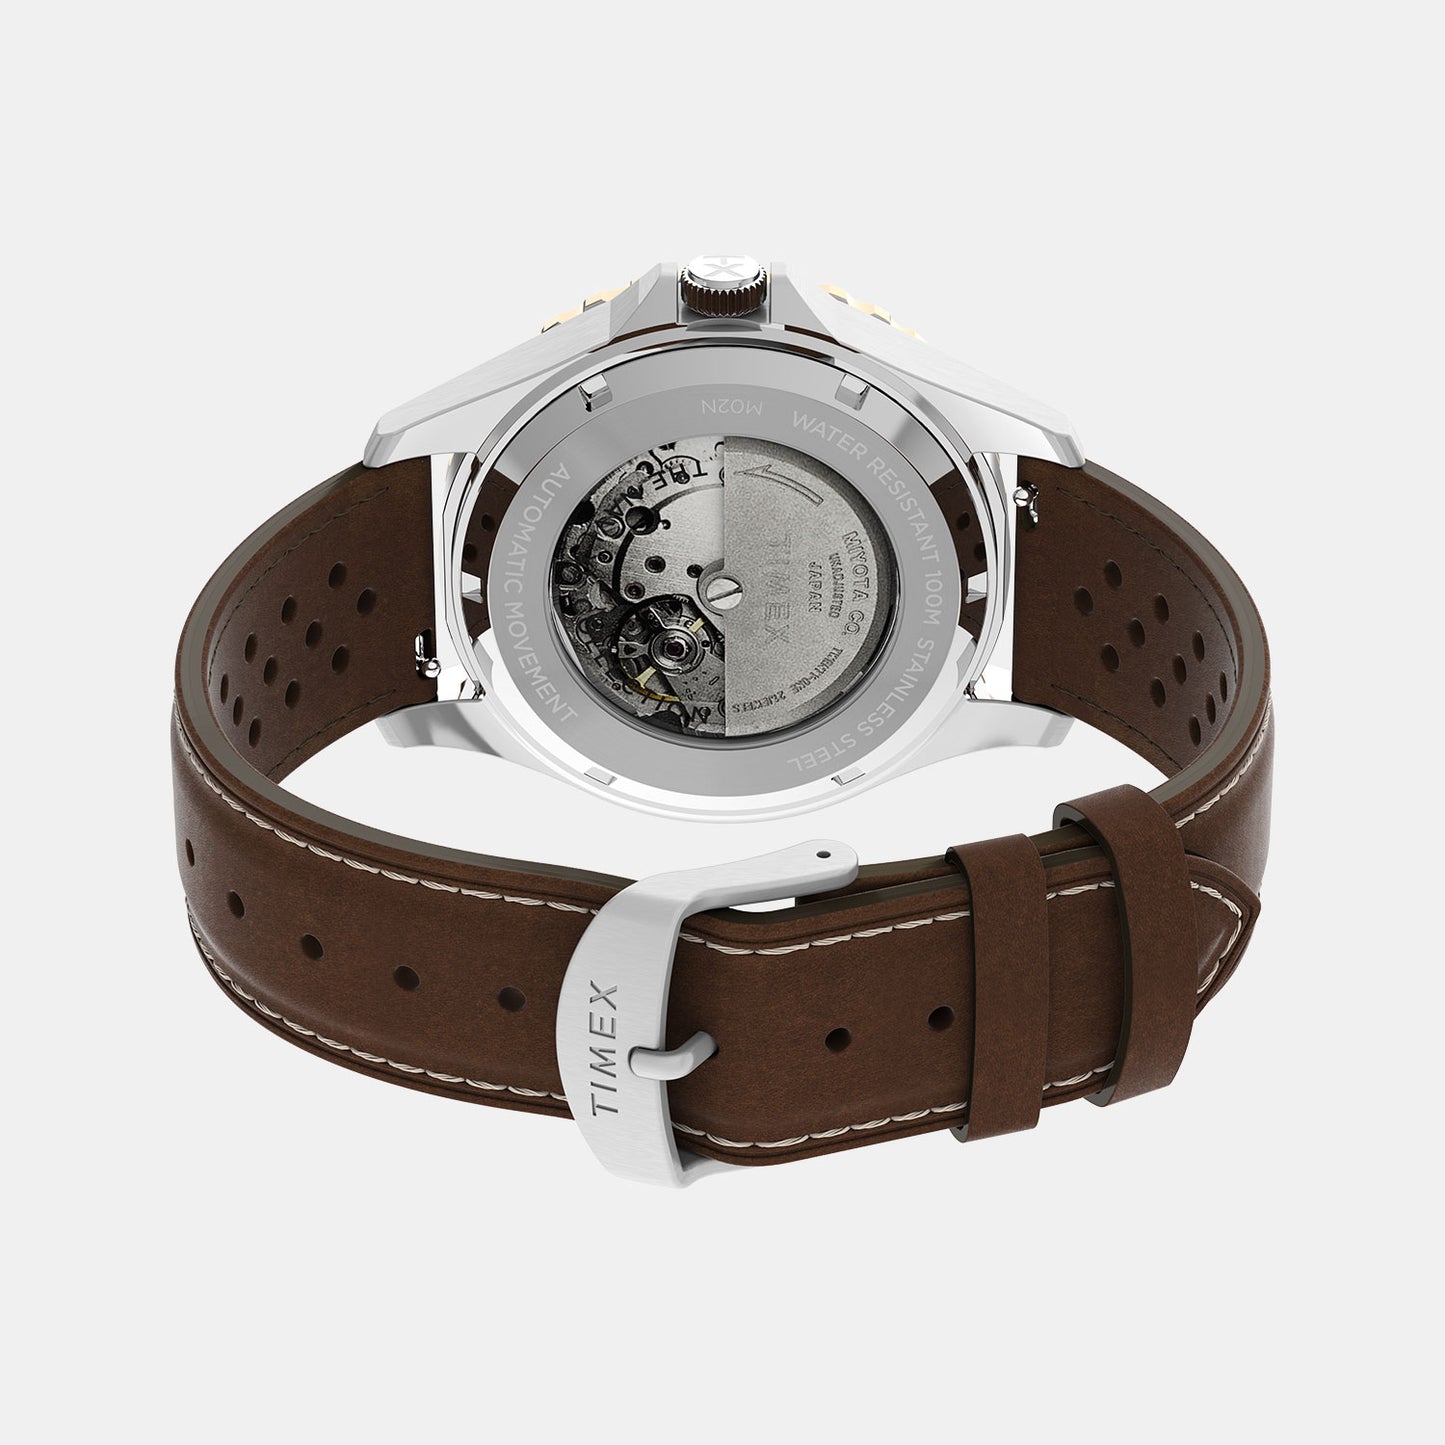 Trend Male Tan Analog Stainless Steel Watch TW2V41500U9